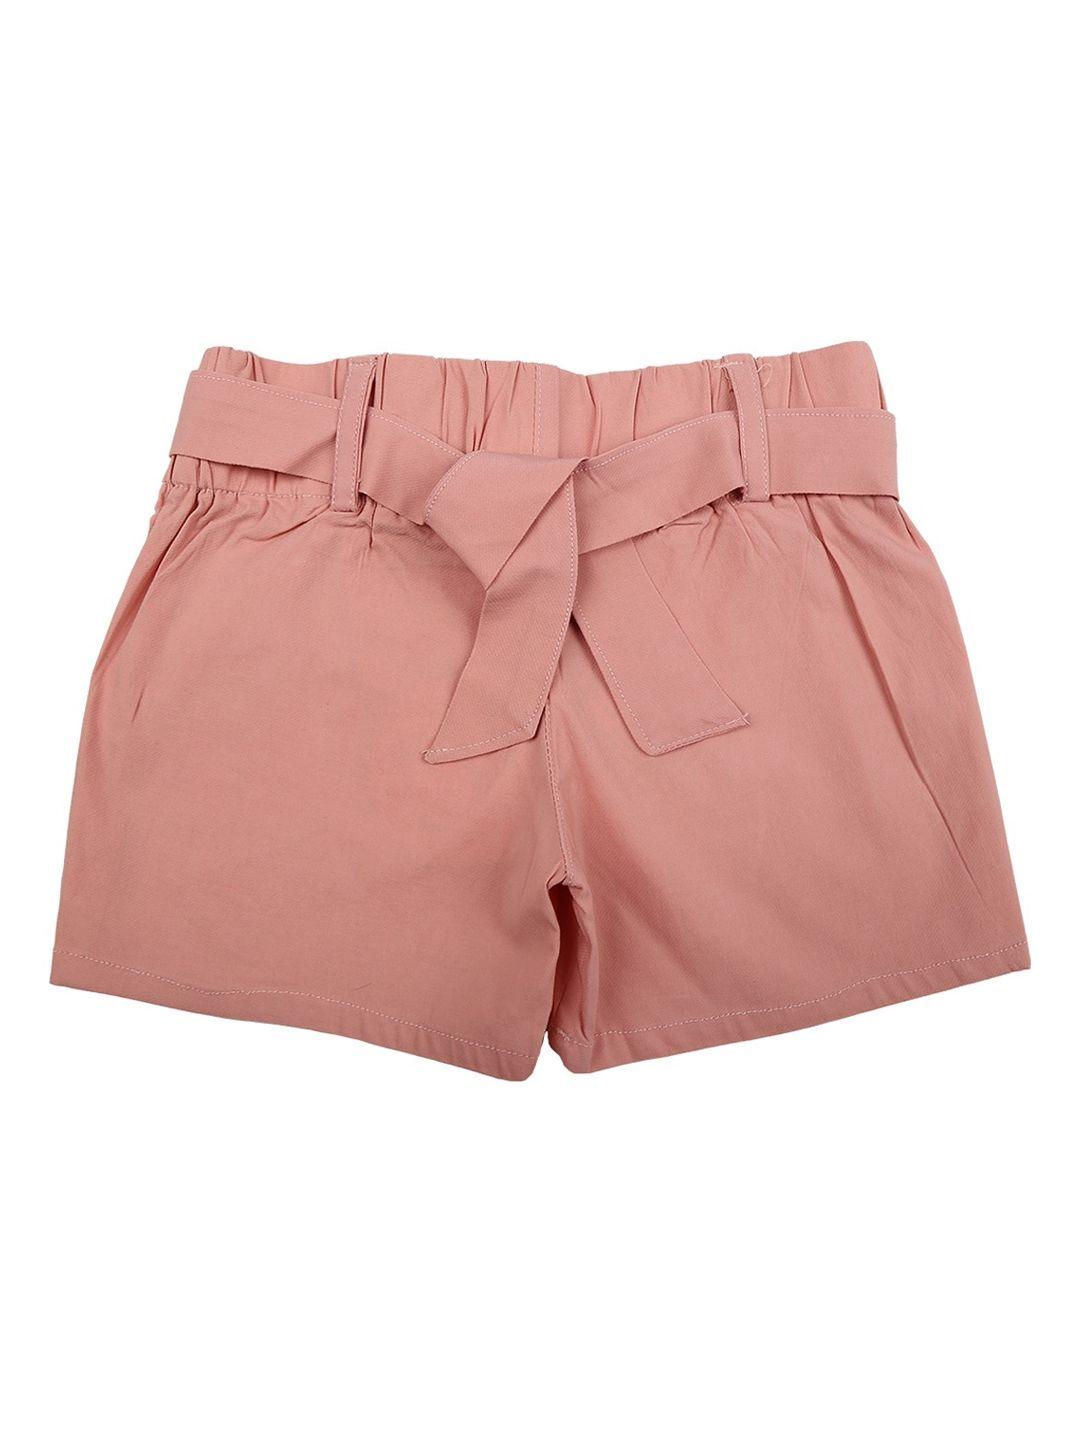 v-mart kids pink solid outdoor cotton shorts